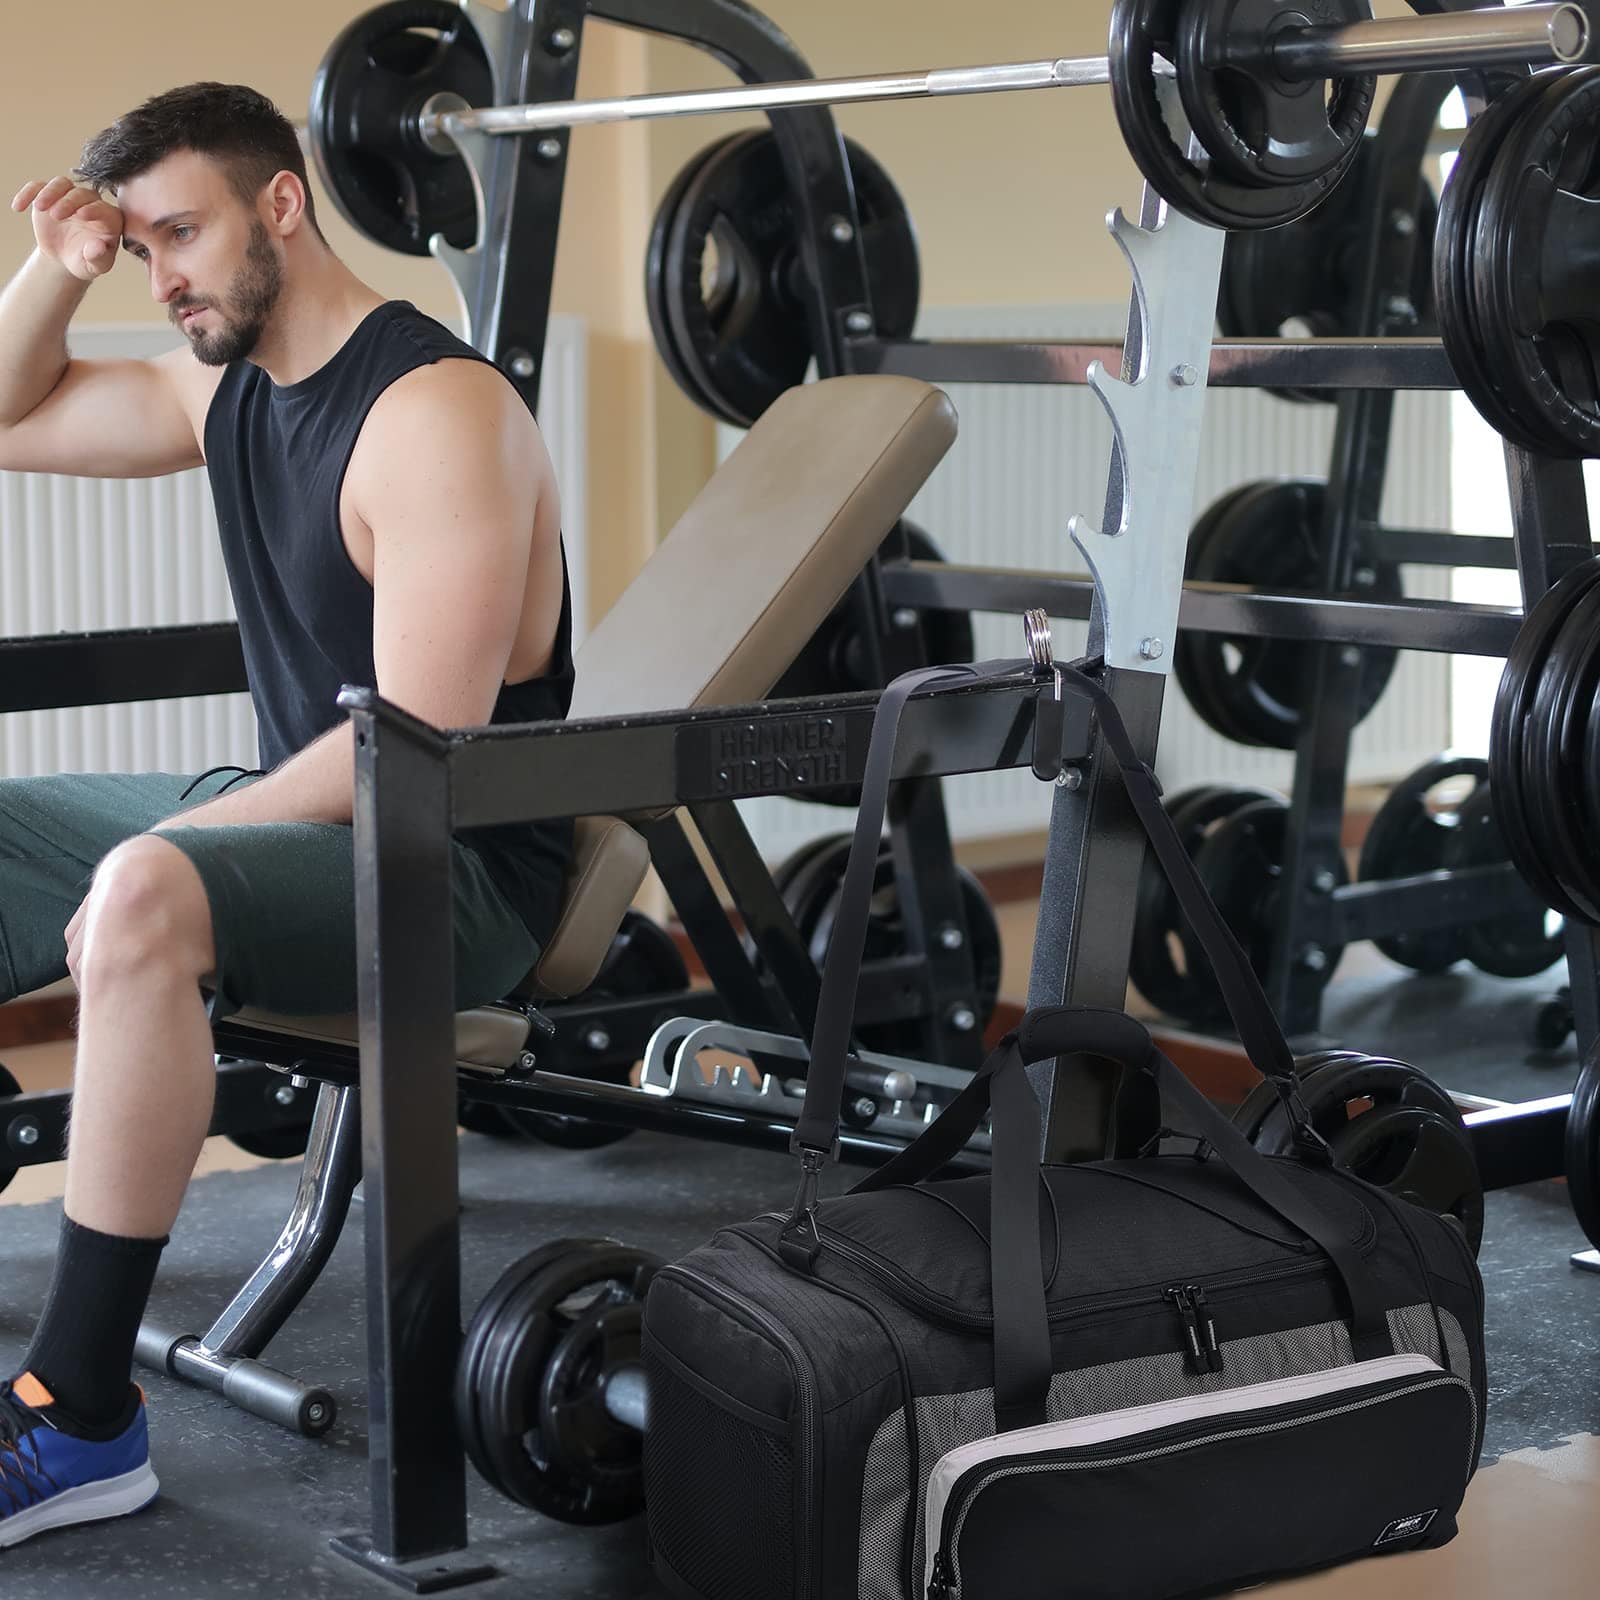 Large Sports Gym Bag Duffel Bag with Shoe Compartment, 60L Gym Duffel Bag MIER